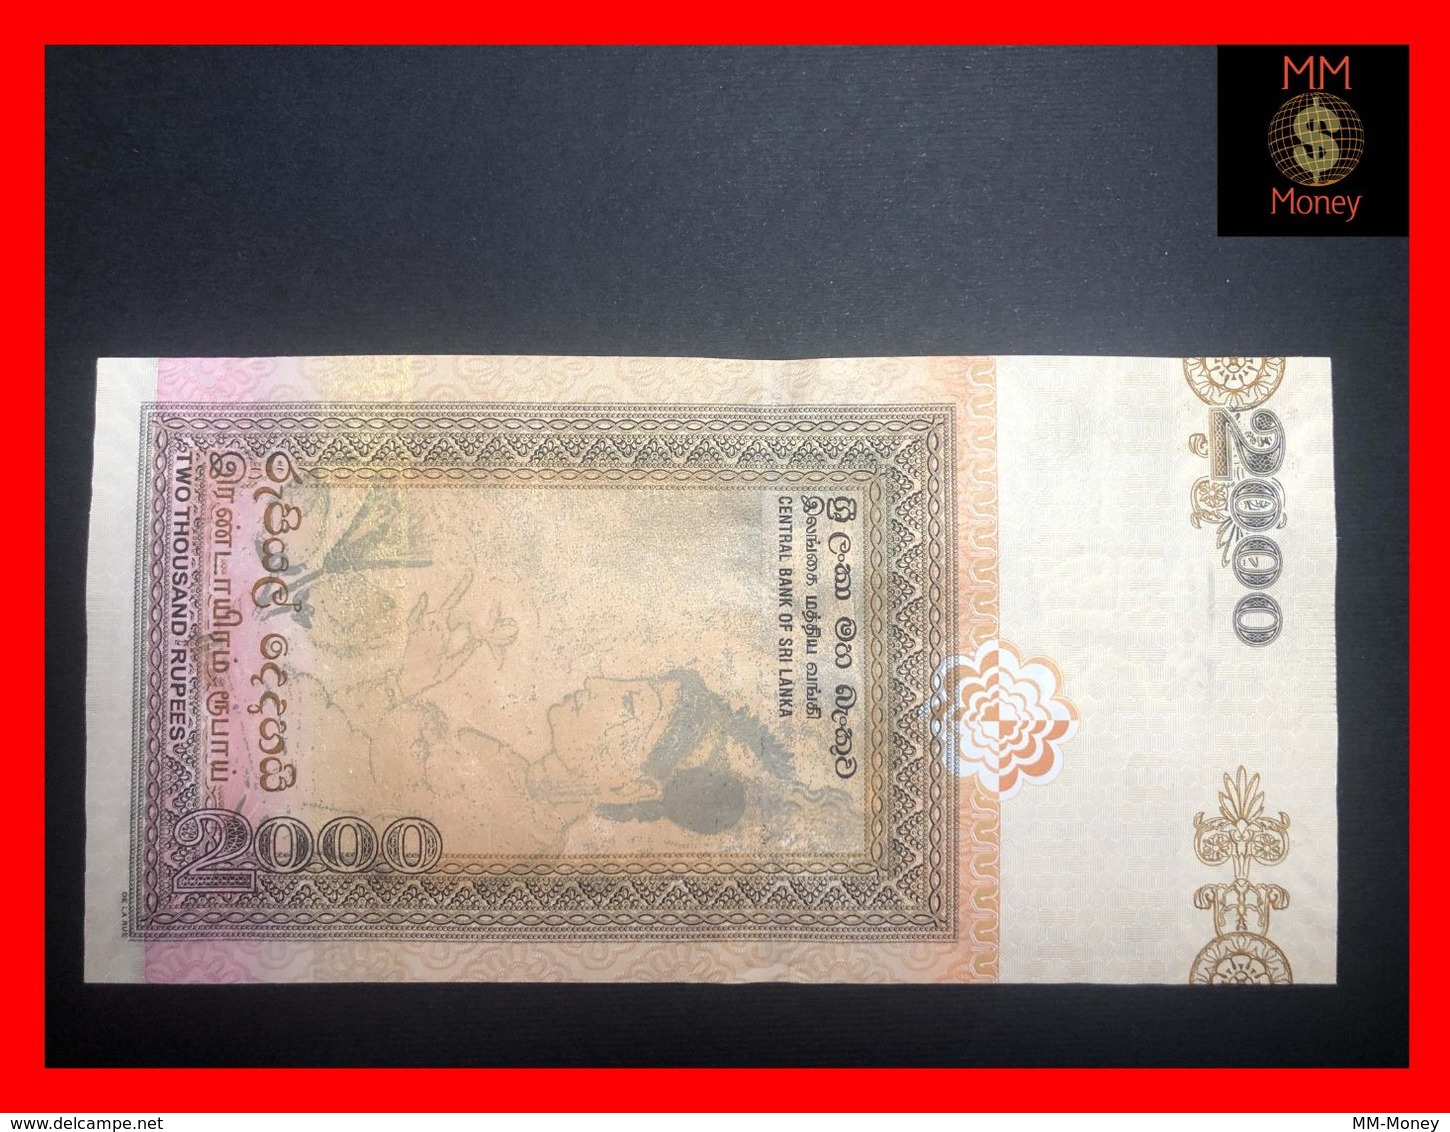 Ceylon - Sri Lanka  2.000 2000 Rupees  2.11.2005  P. 121 UNC - Sri Lanka